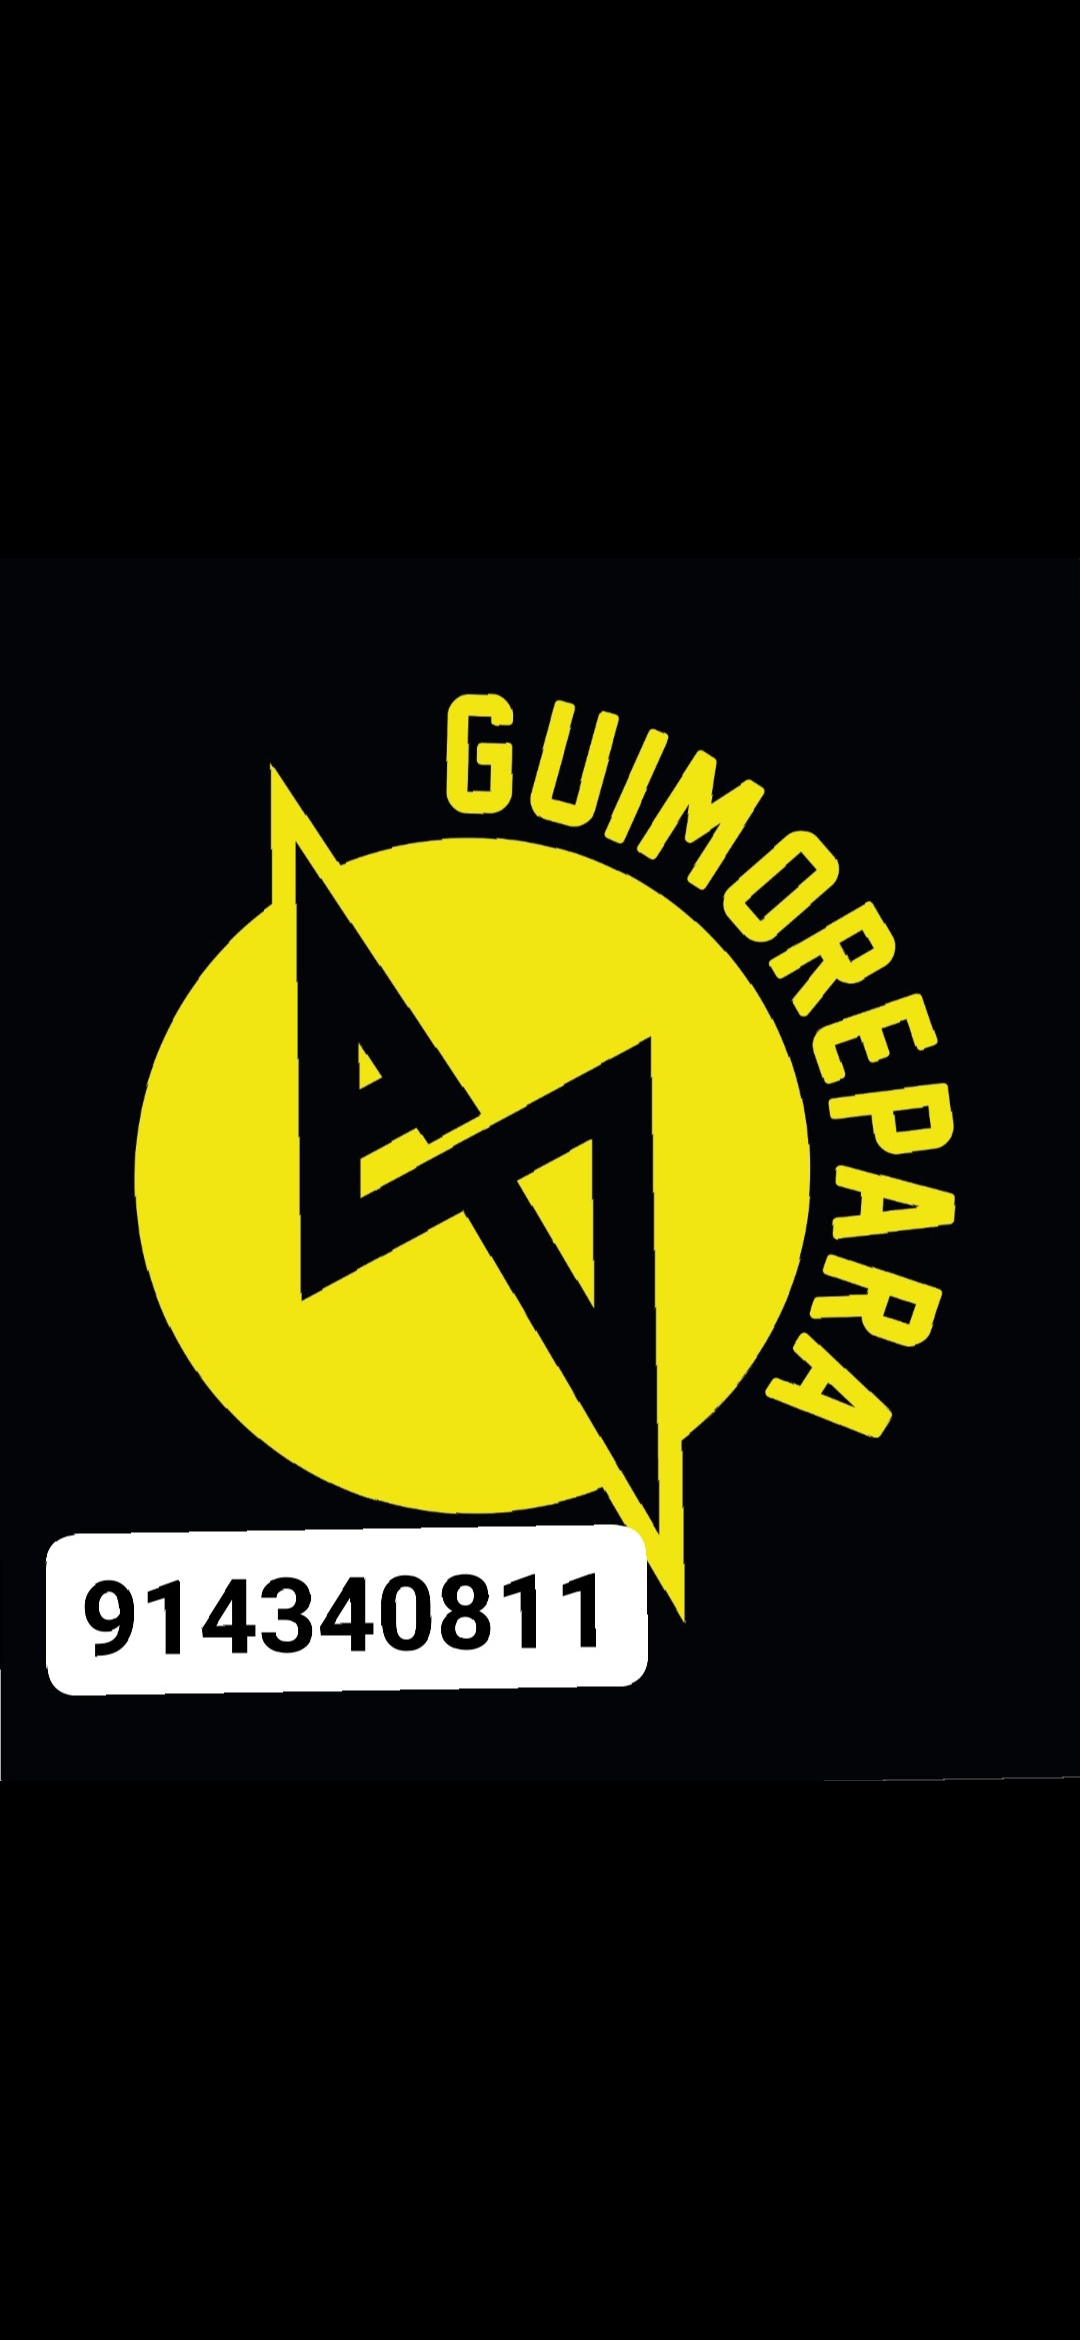 Guimorepara - Guimarães - Elétricos